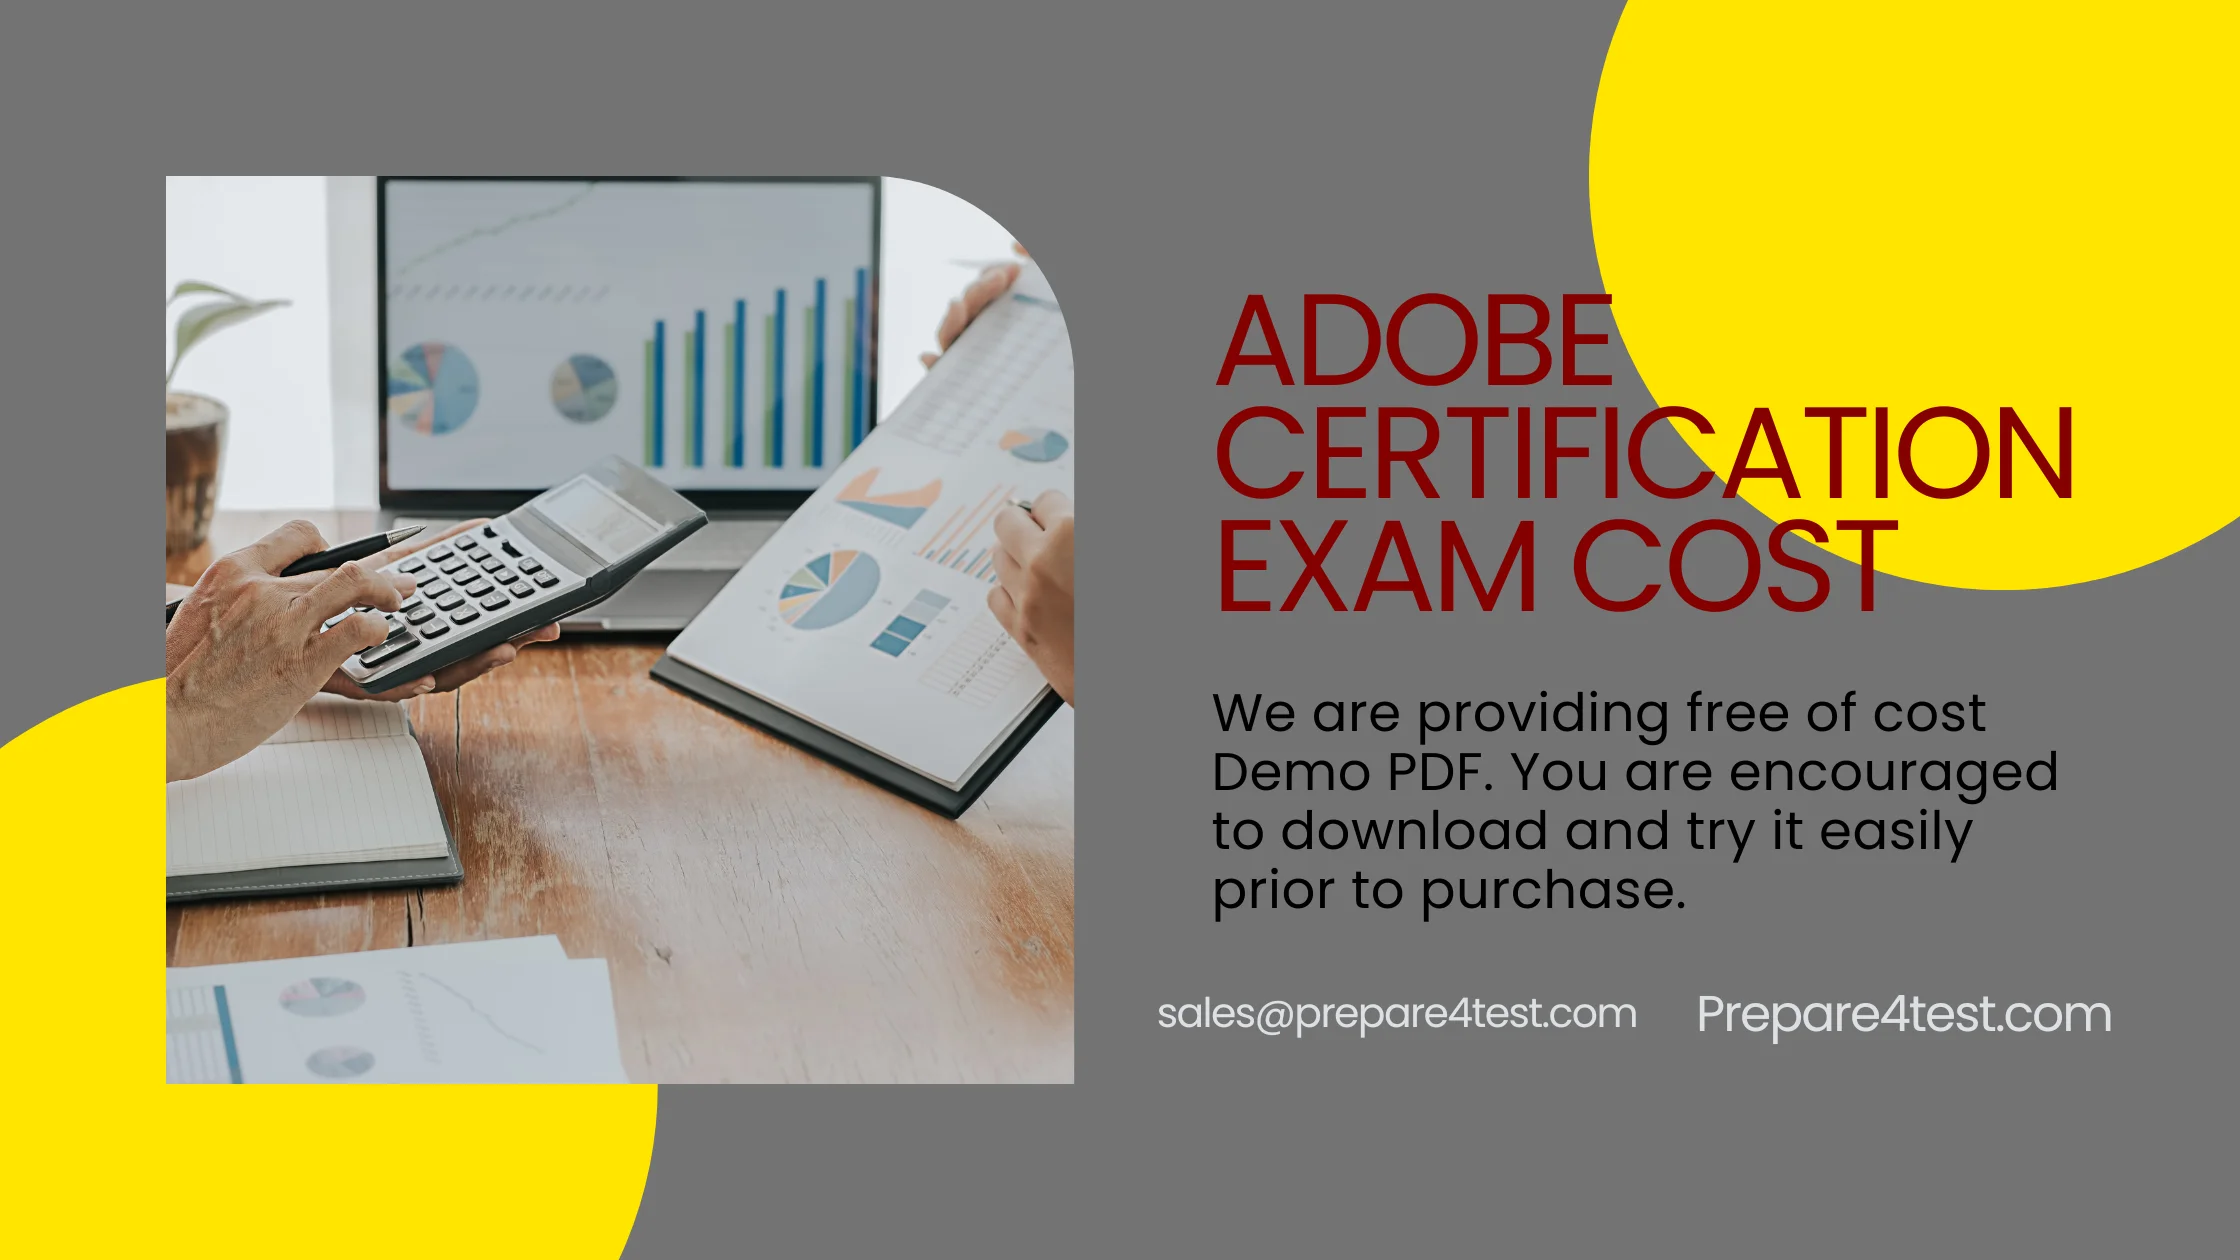 Adobe Certification Exam Cost guarantee